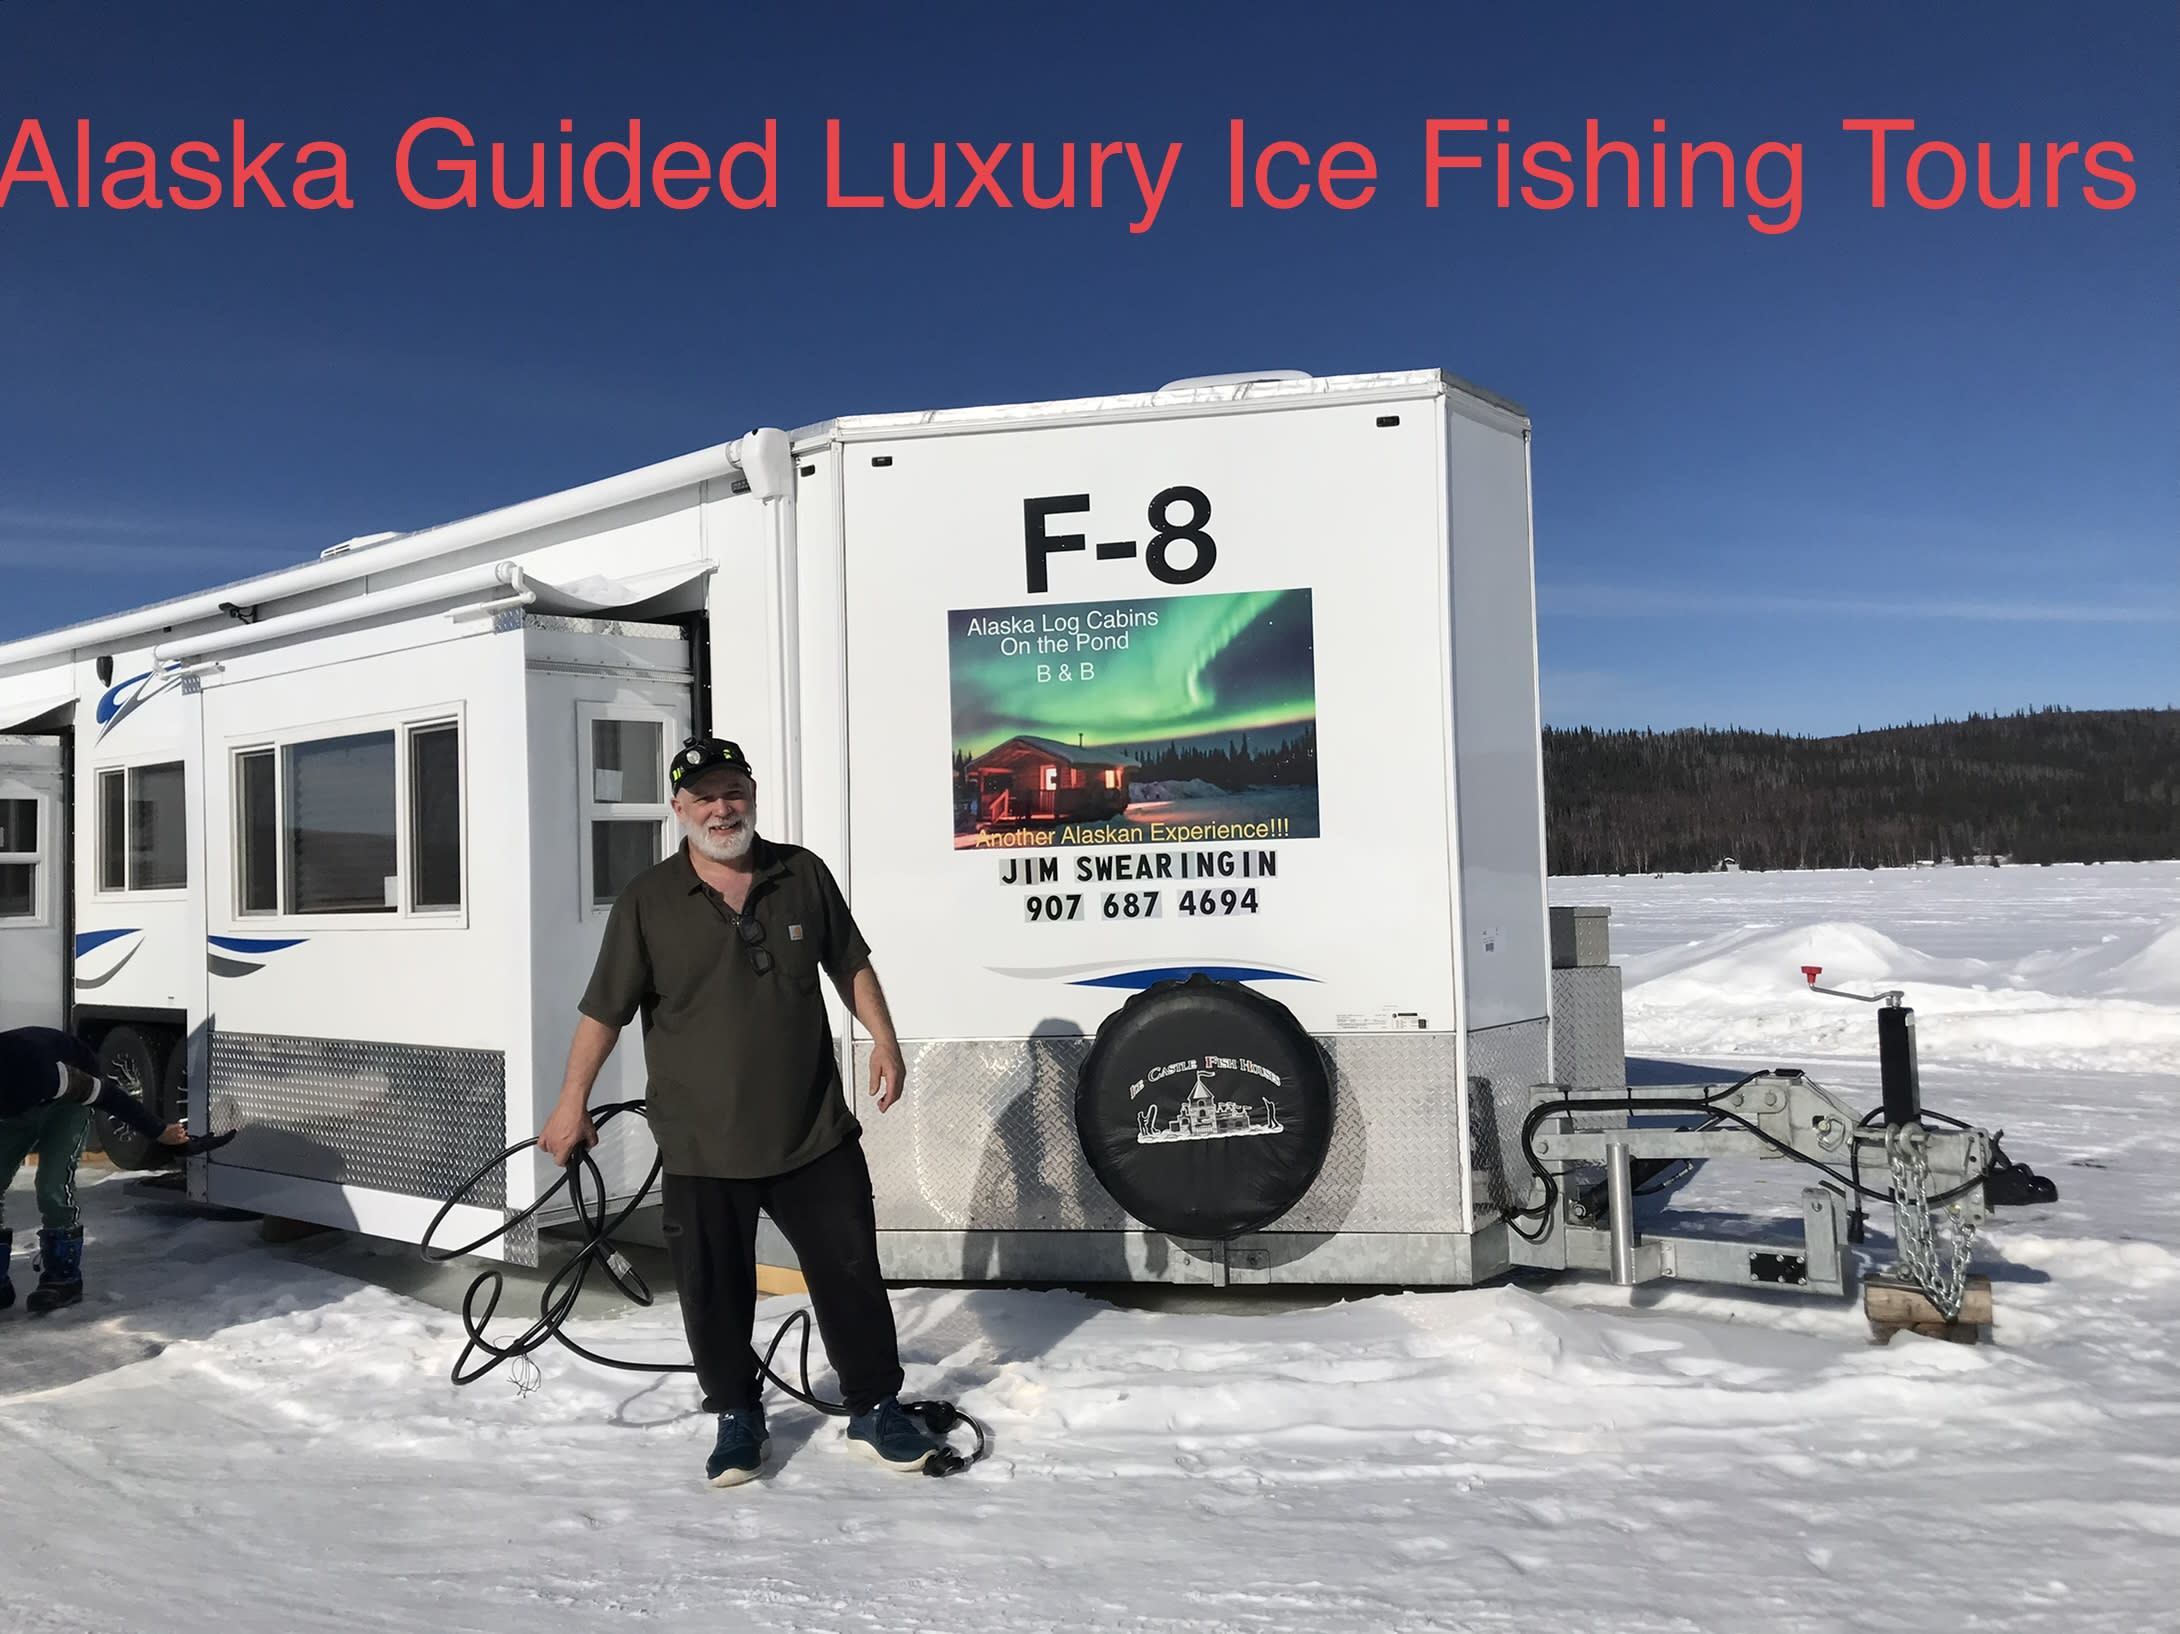 Alaska Guided Luxury Ice Fishing Tours